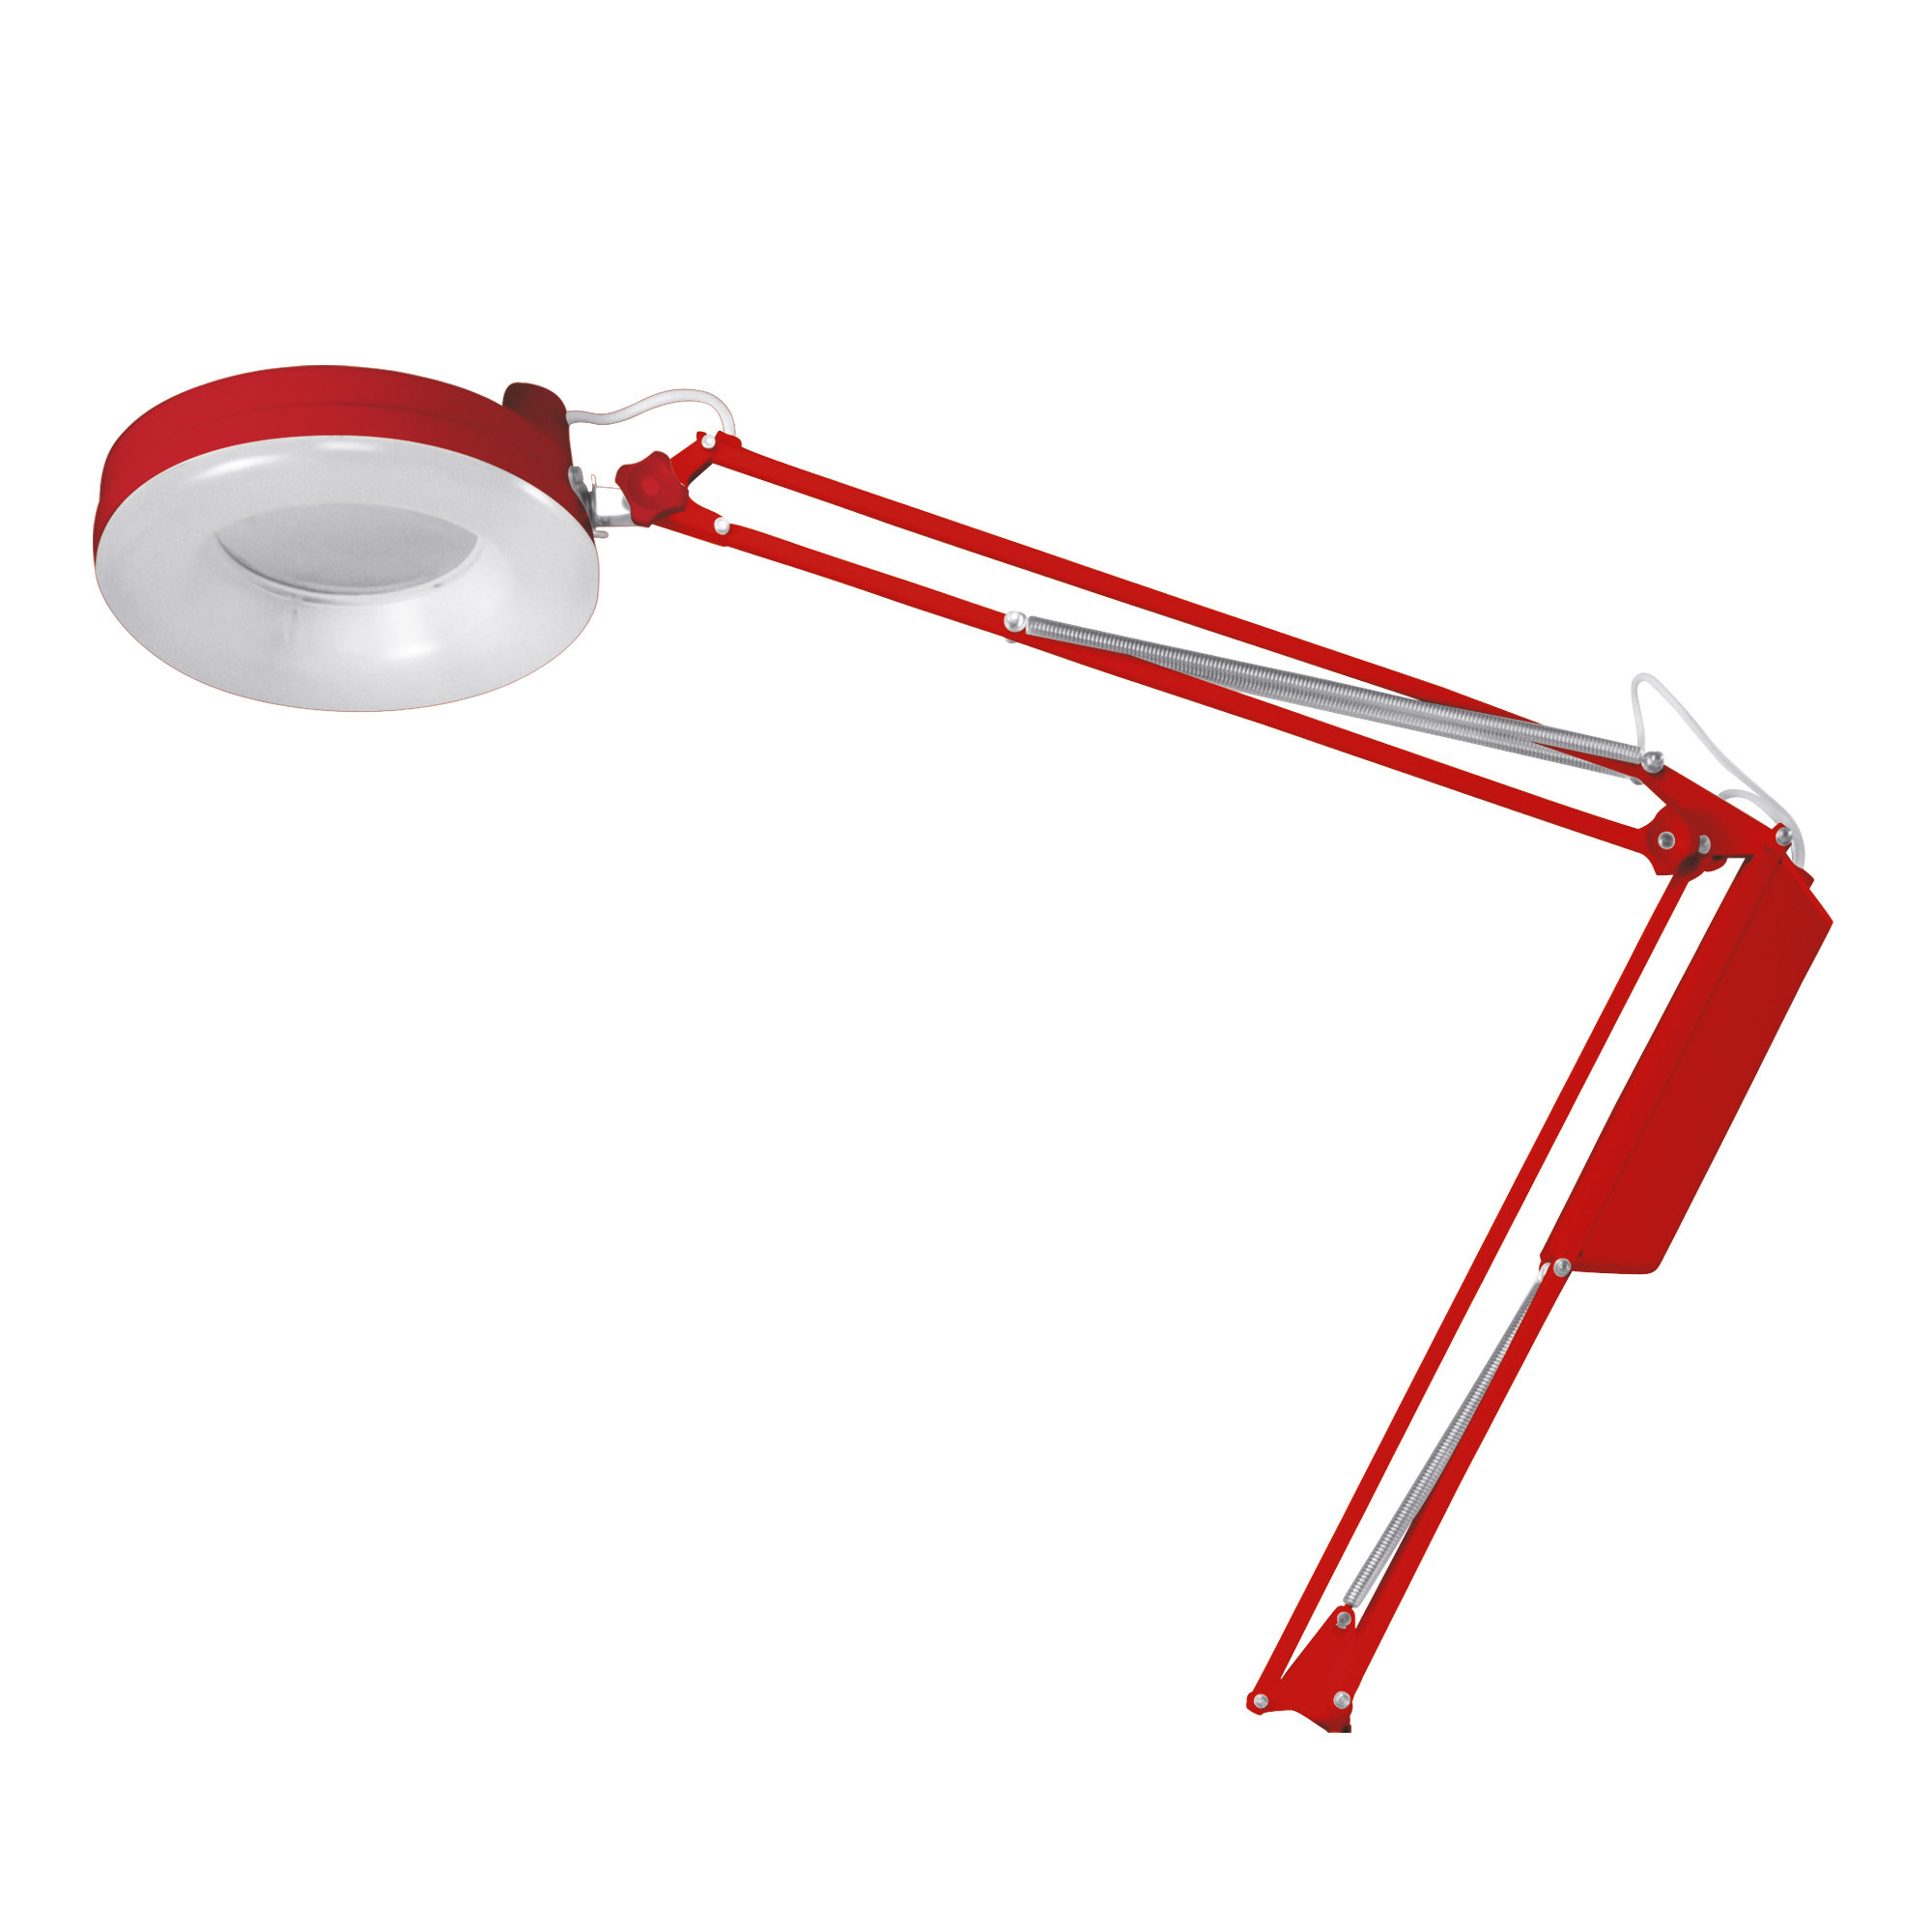 Lampada Afma con luce a neon e lente di ingrandimento a 5 diottrie rossa